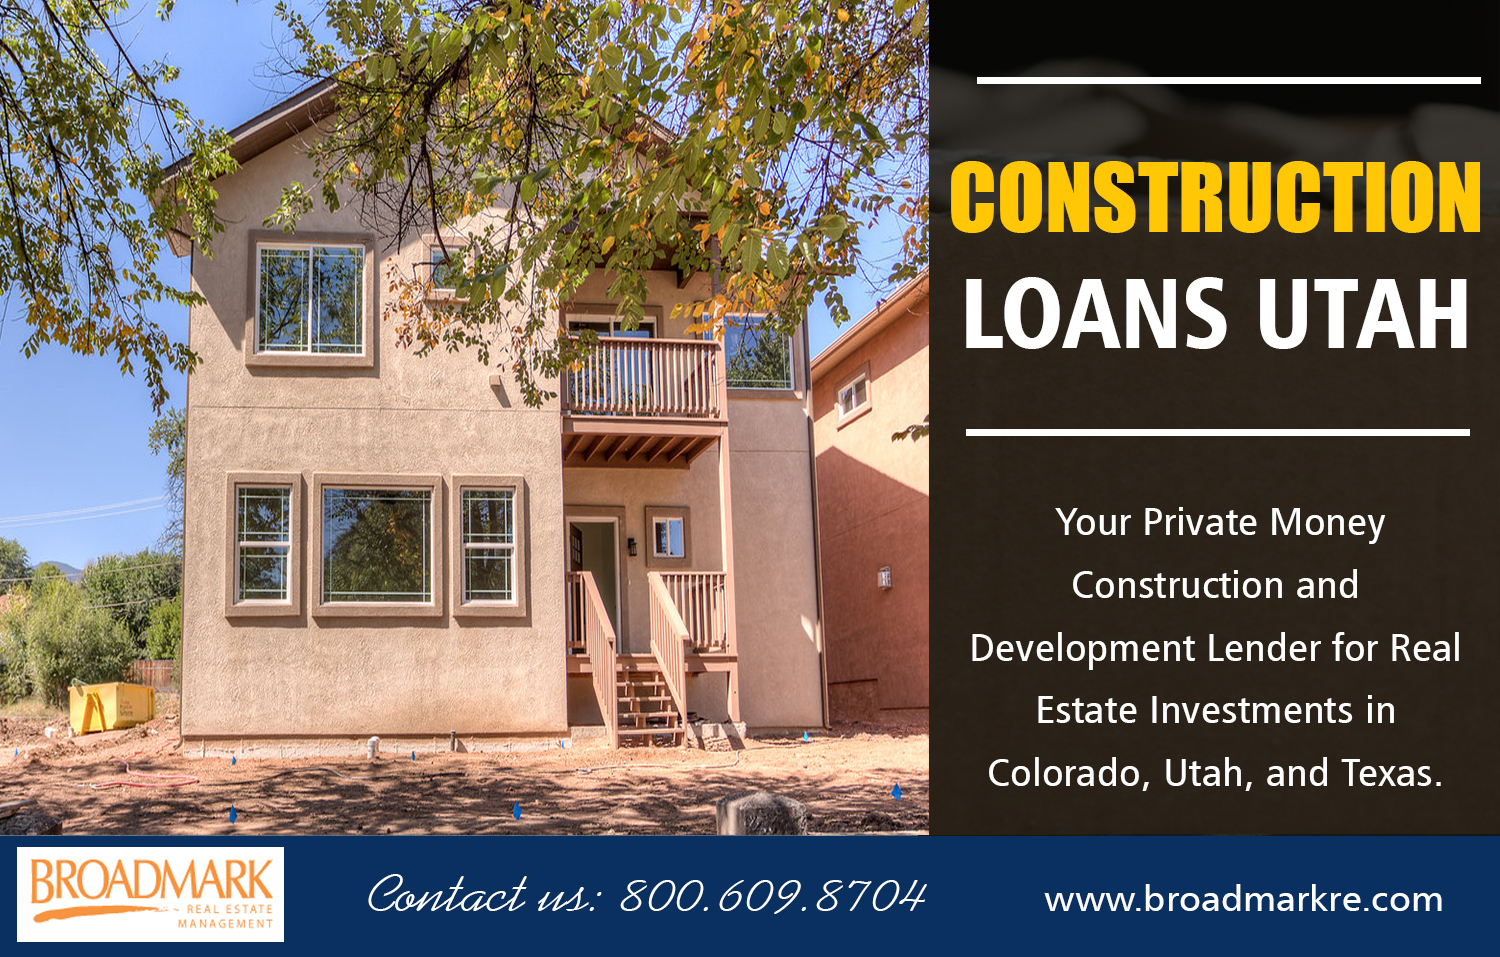 Construction Loans Utah